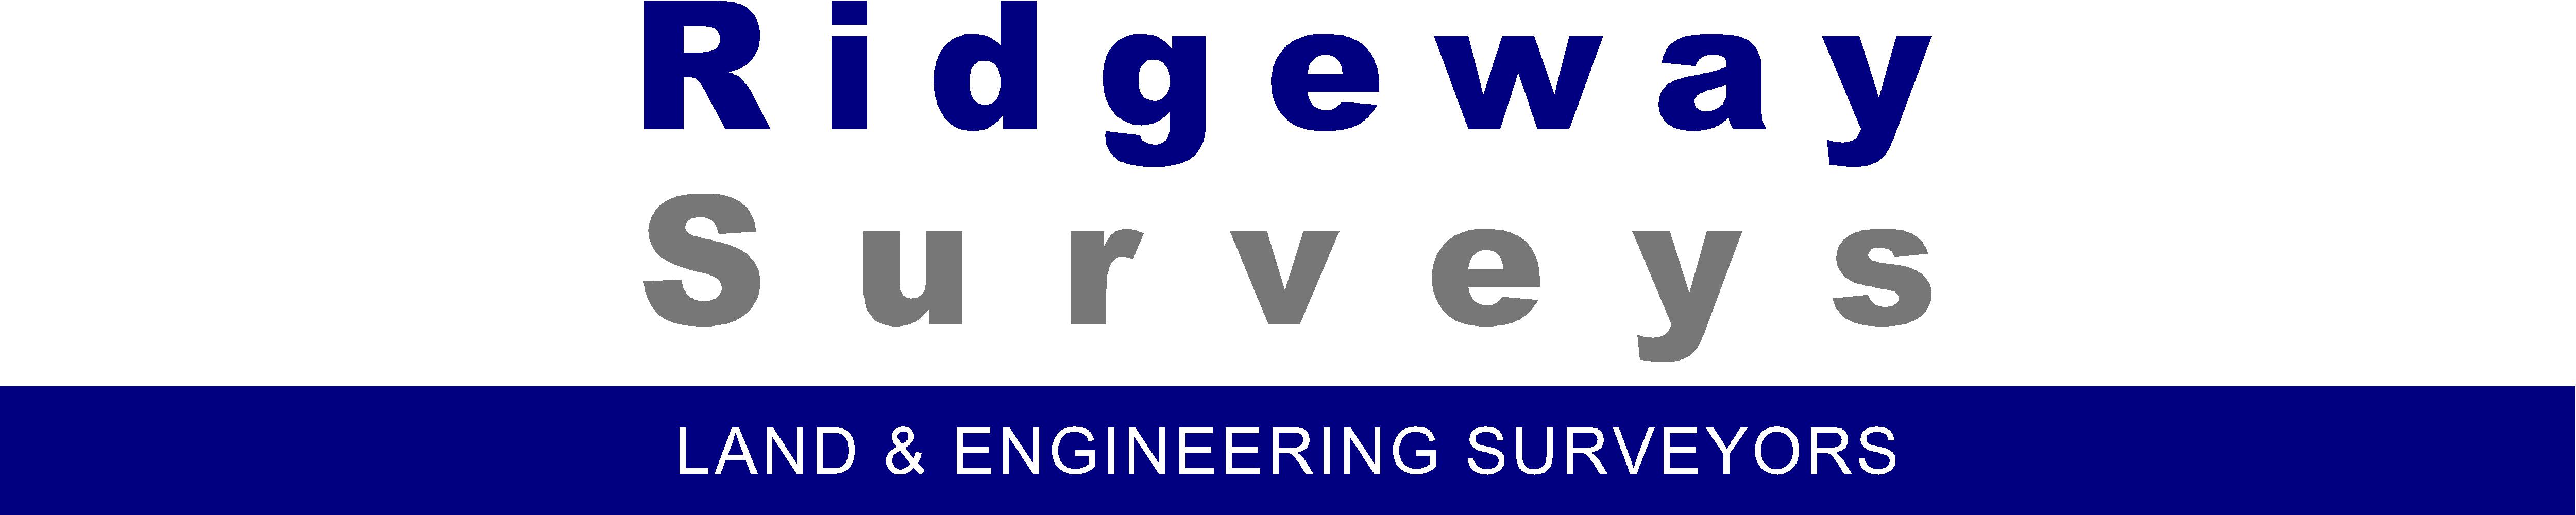 Ridgeway Surveys Ltd. Land & Engineering Surveyors